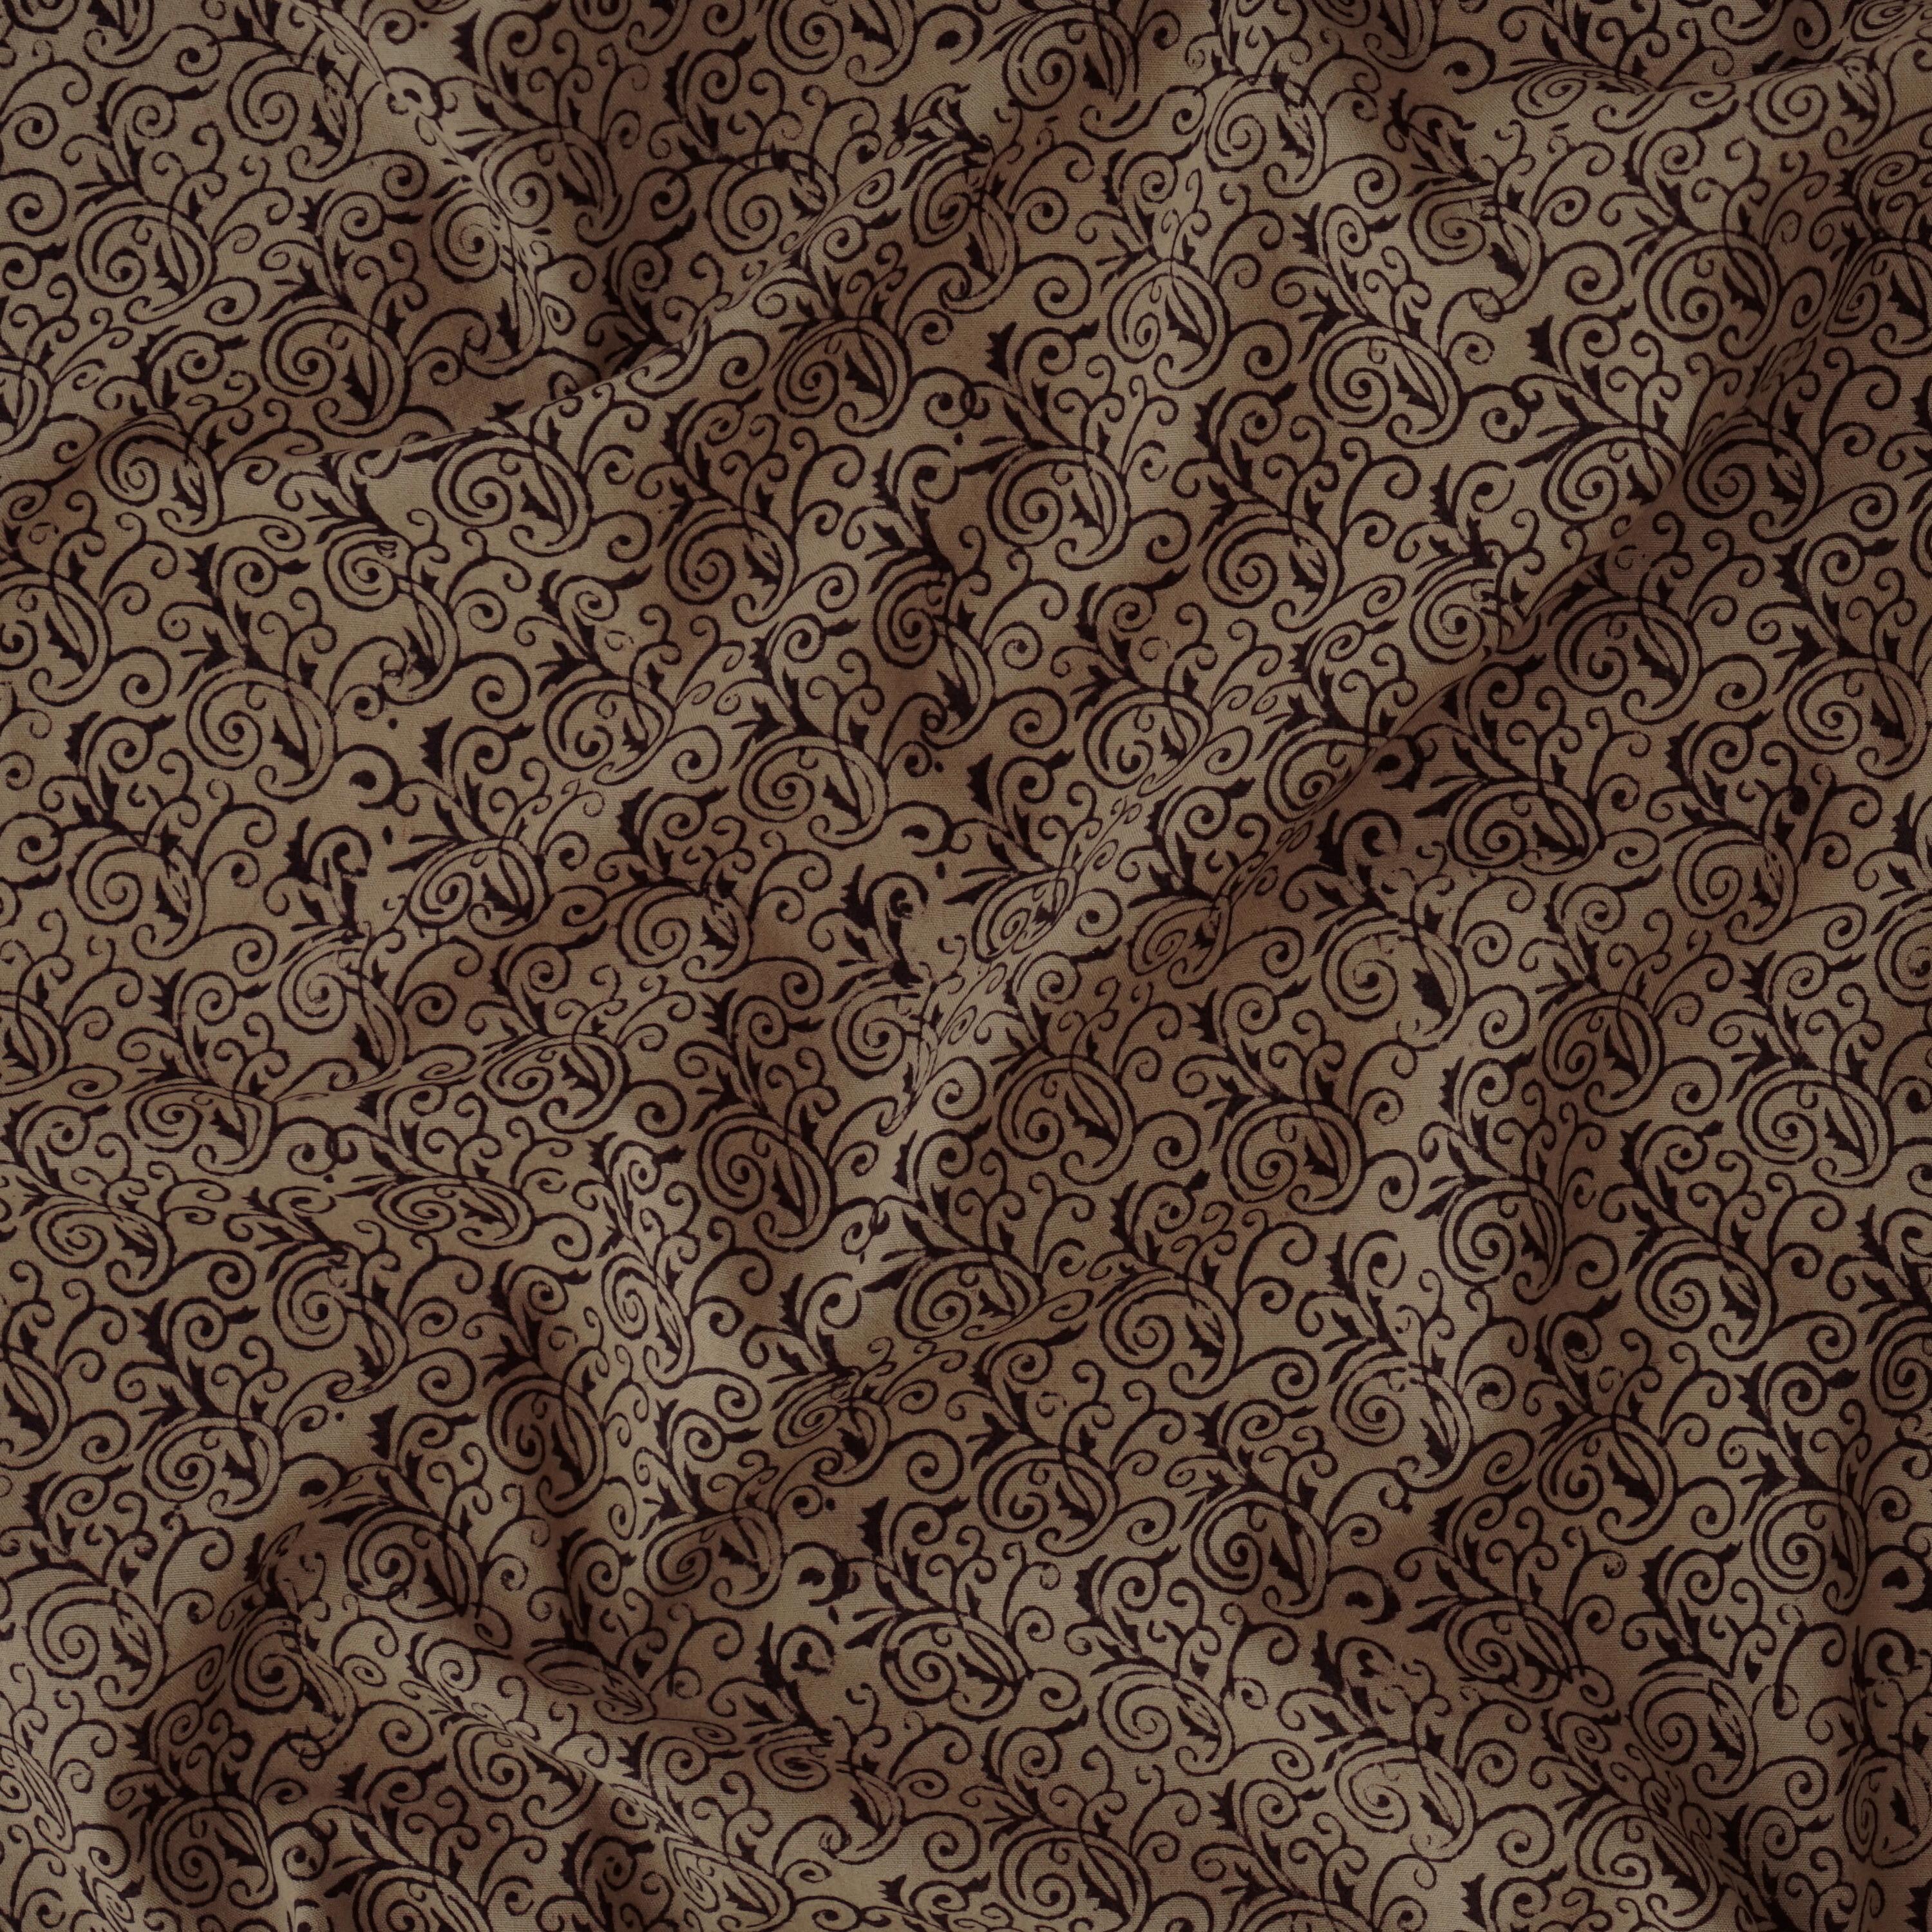 100% Block-Printed Cotton Fabric From India- Bagh - Iron Rust Black & Indigosol Khaki - Quetico Print - Contrast